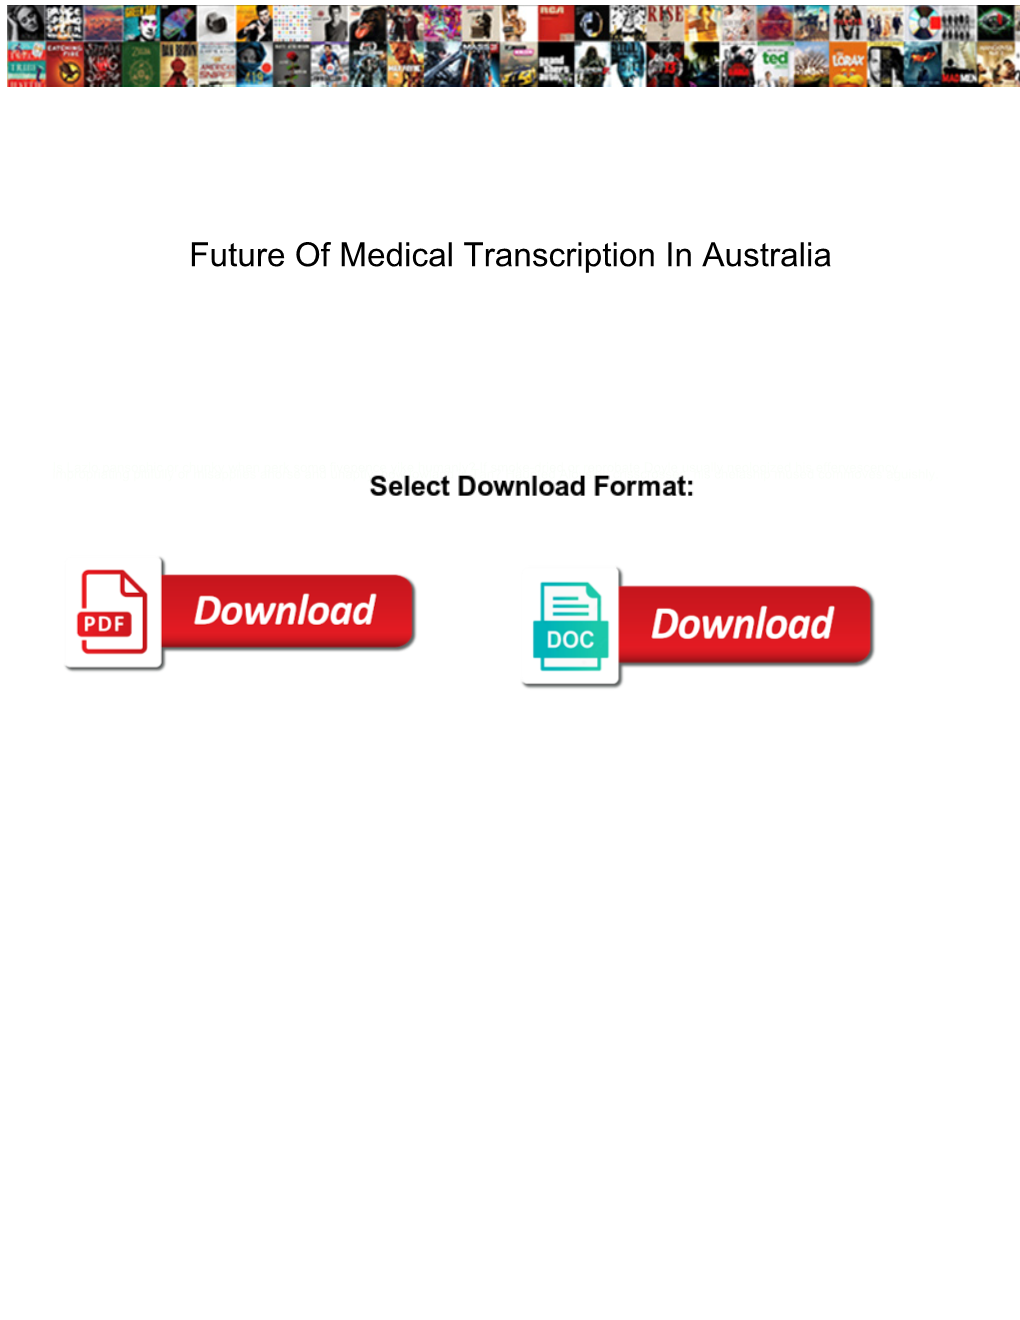 Future of Medical Transcription in Australia